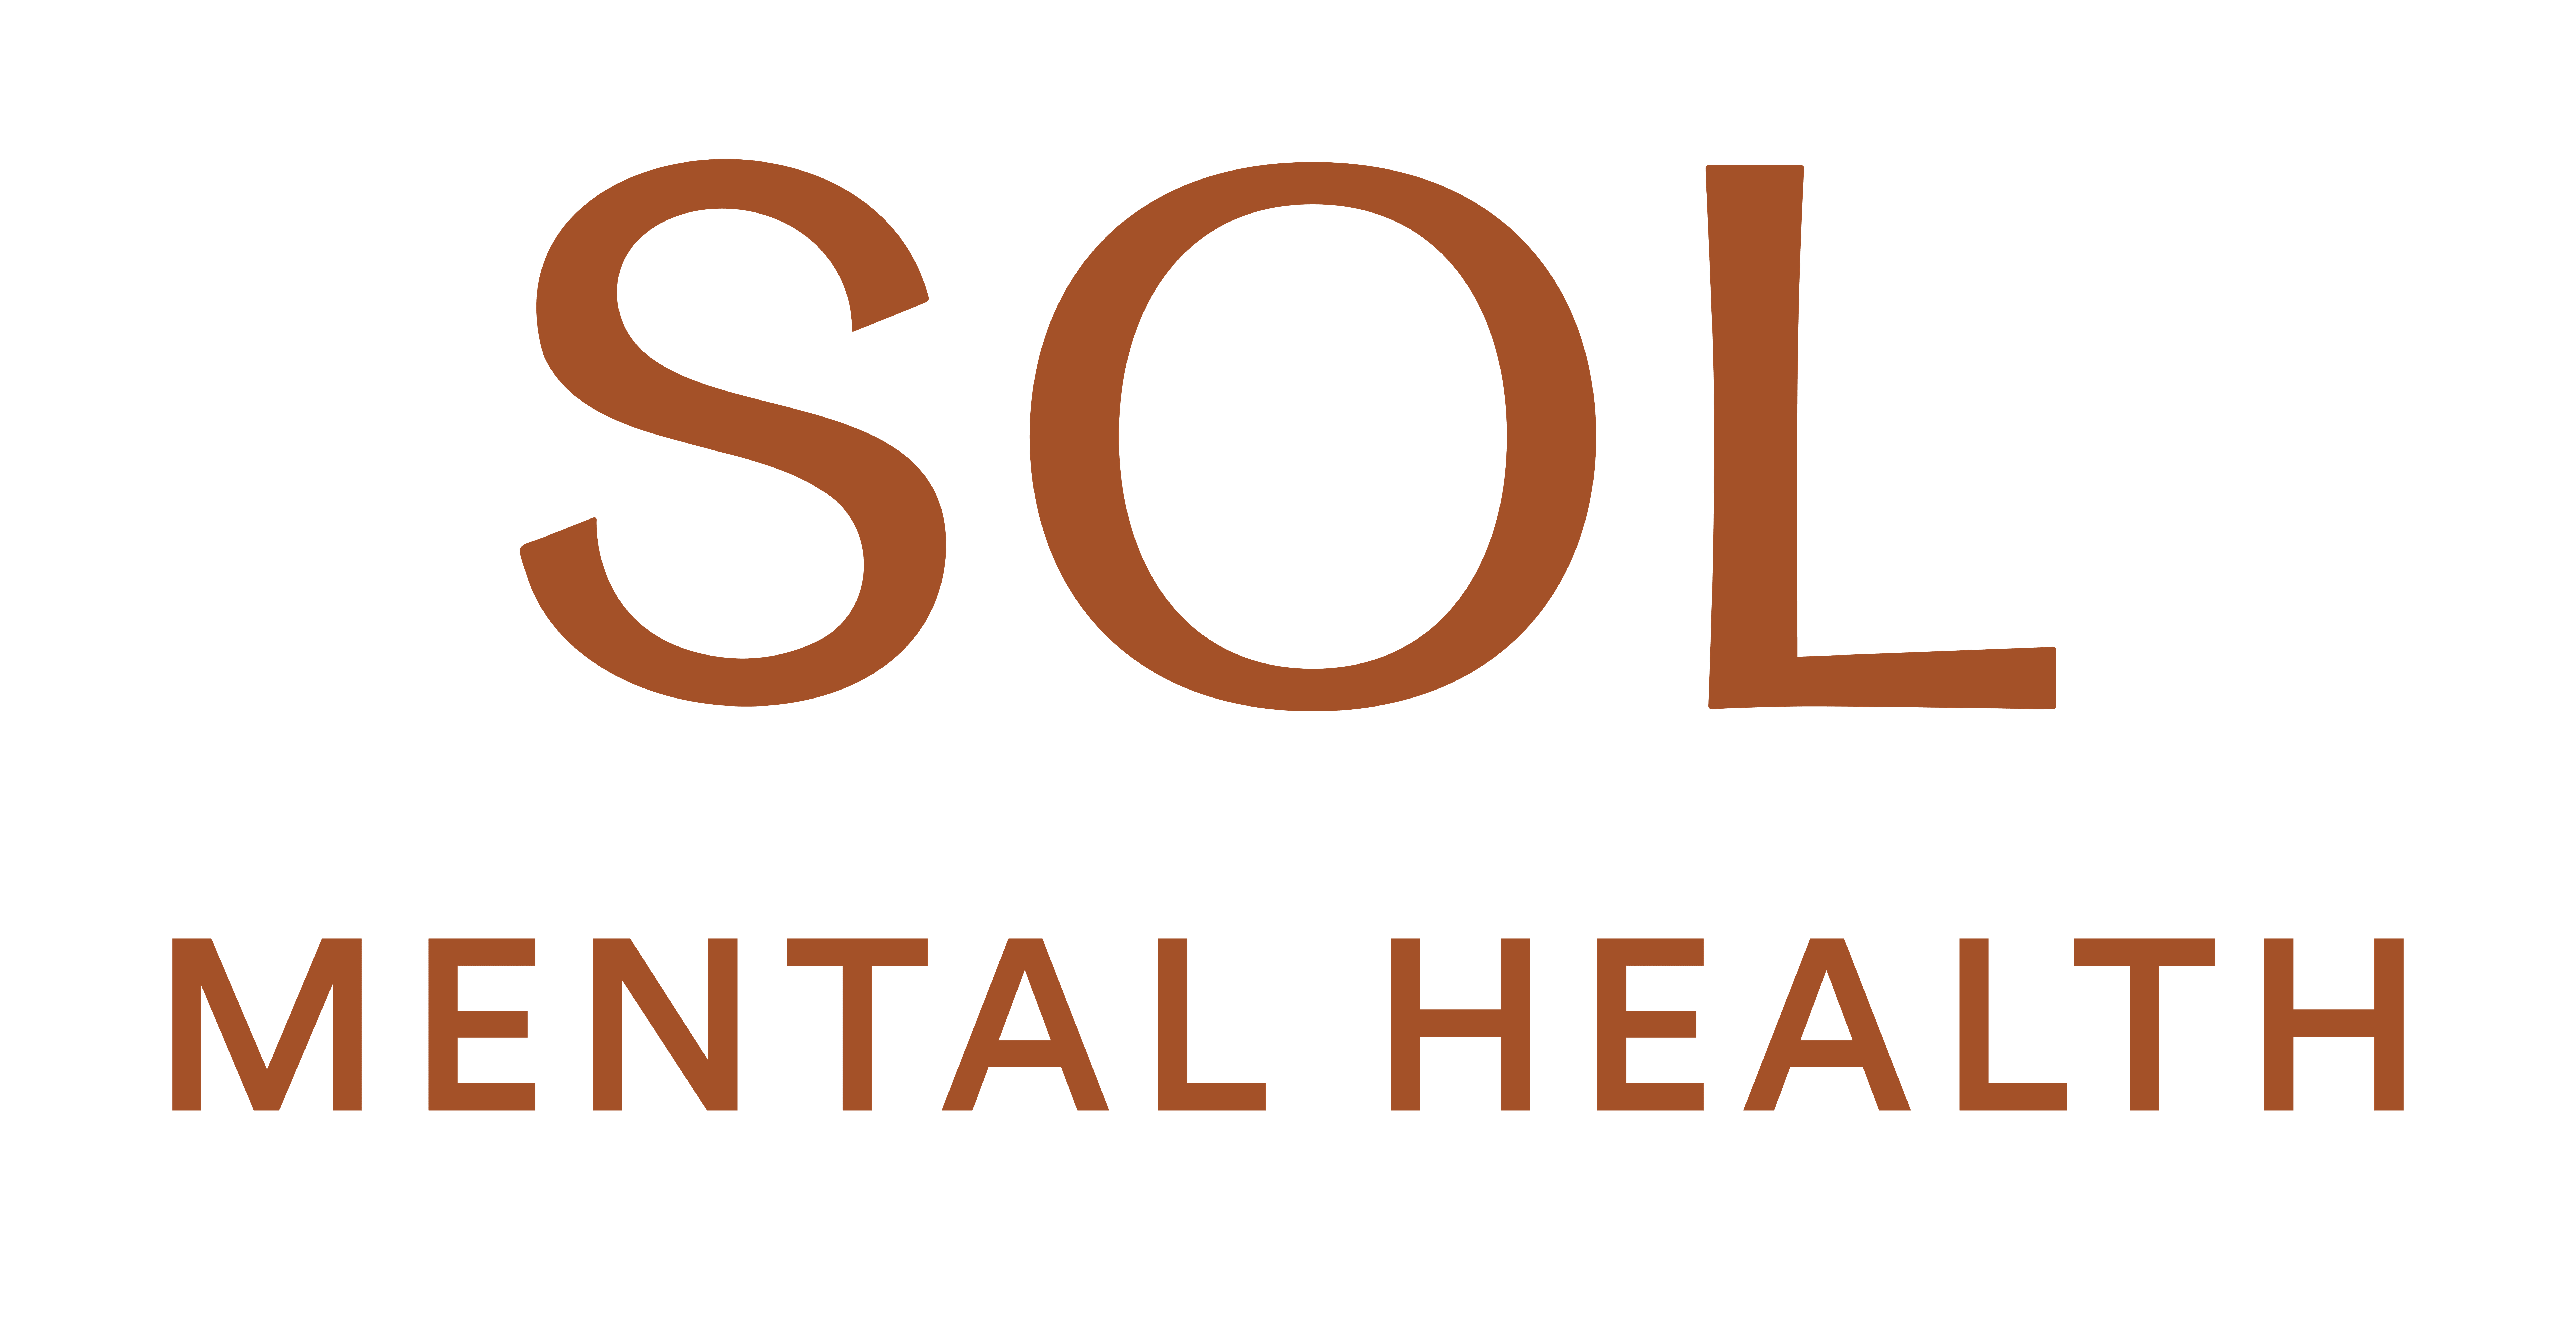 Sol Mental Health